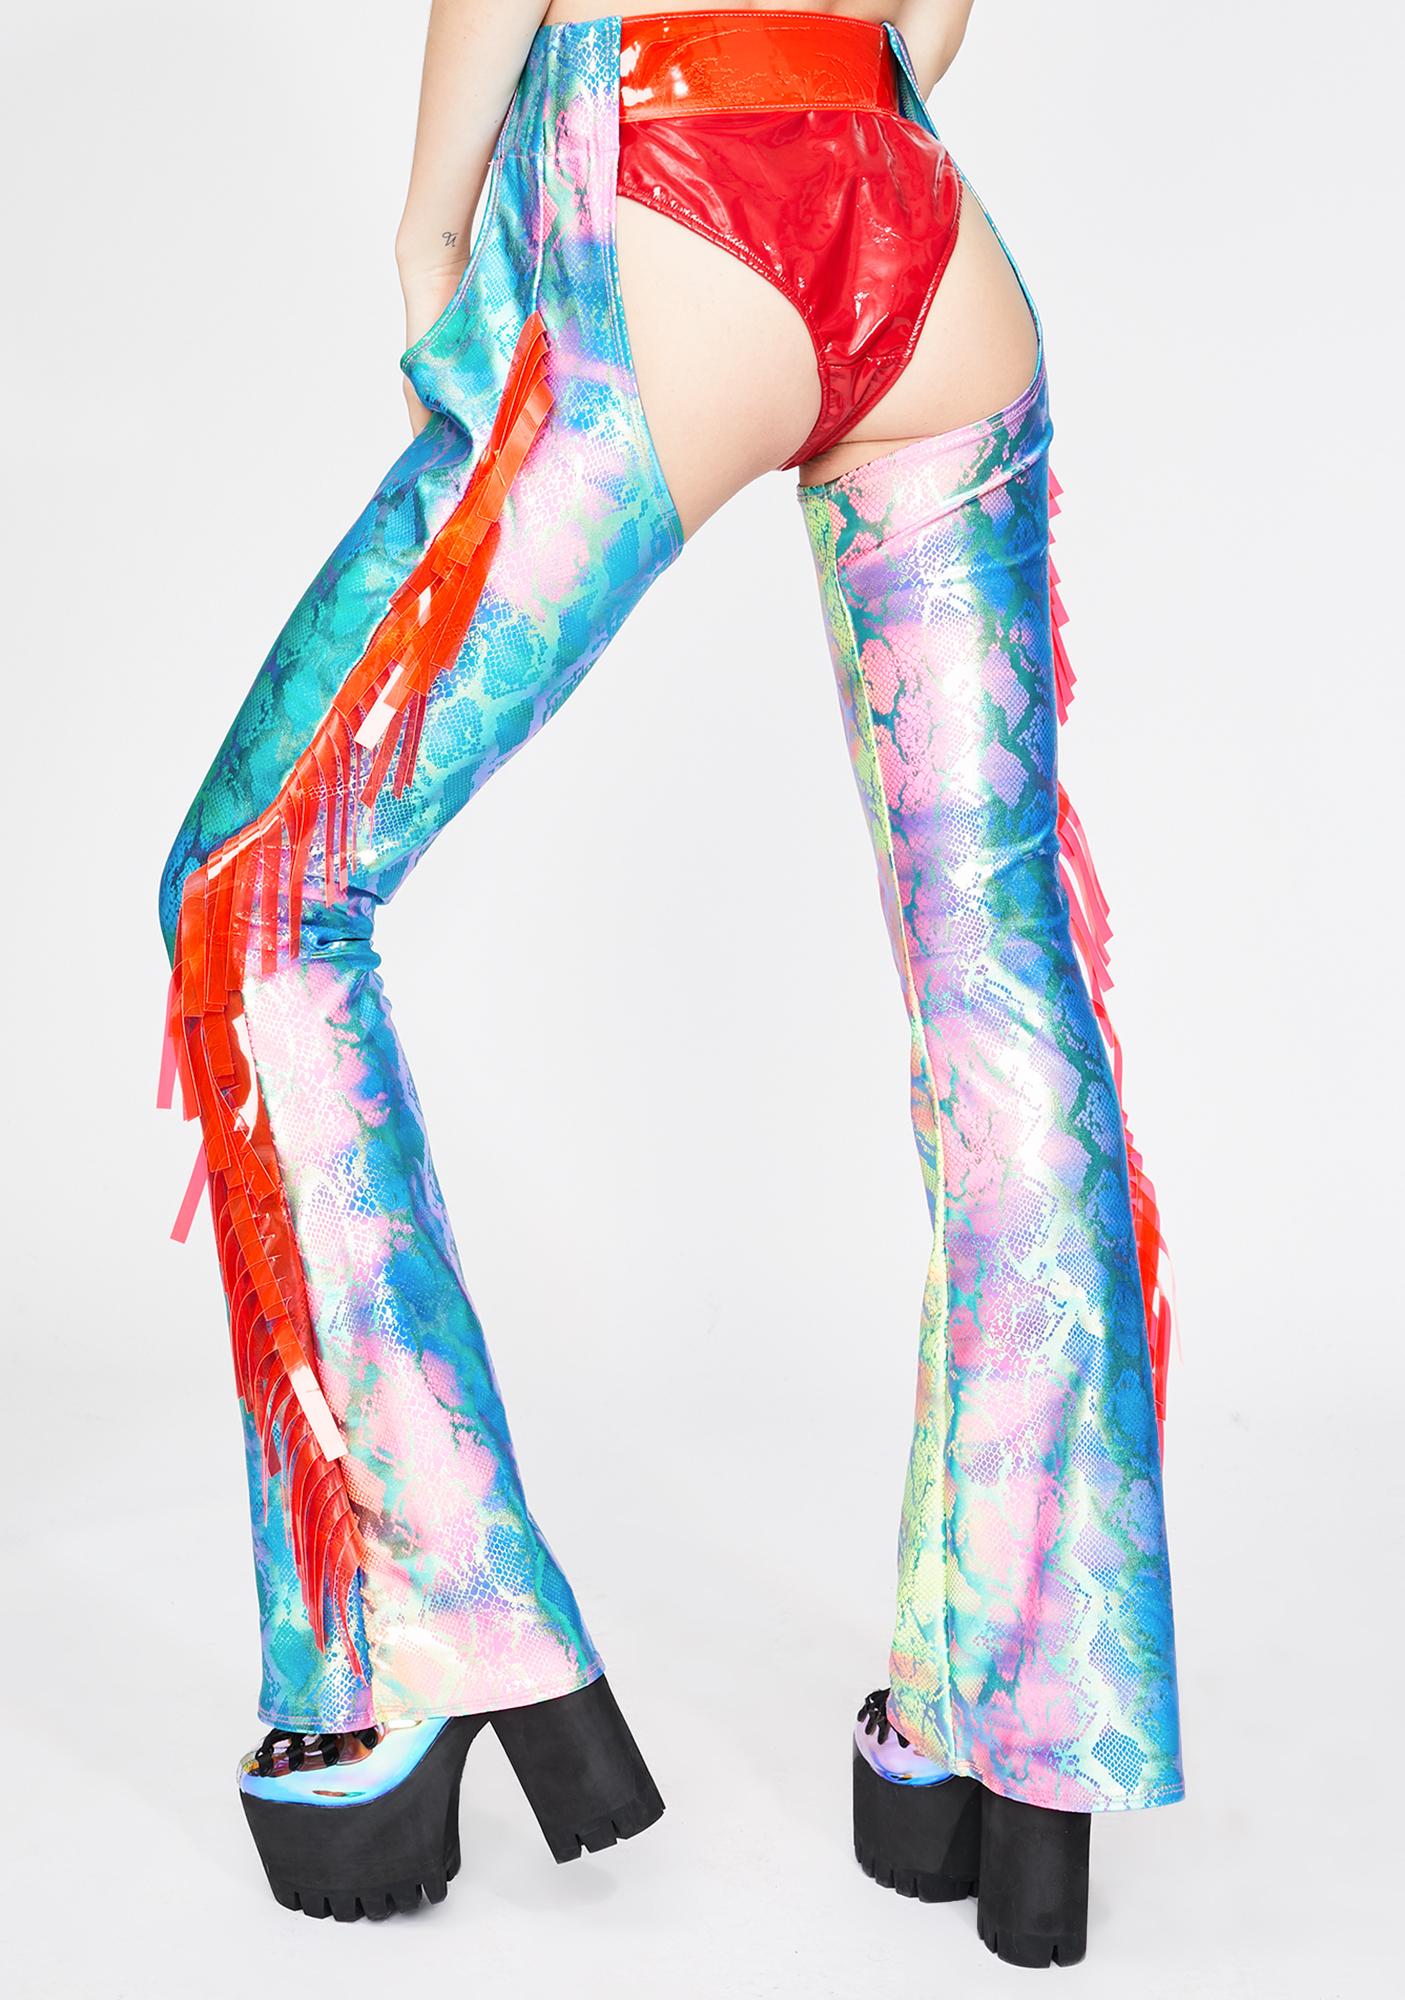 Rainbow Spandex Lace Pantyhose fnt